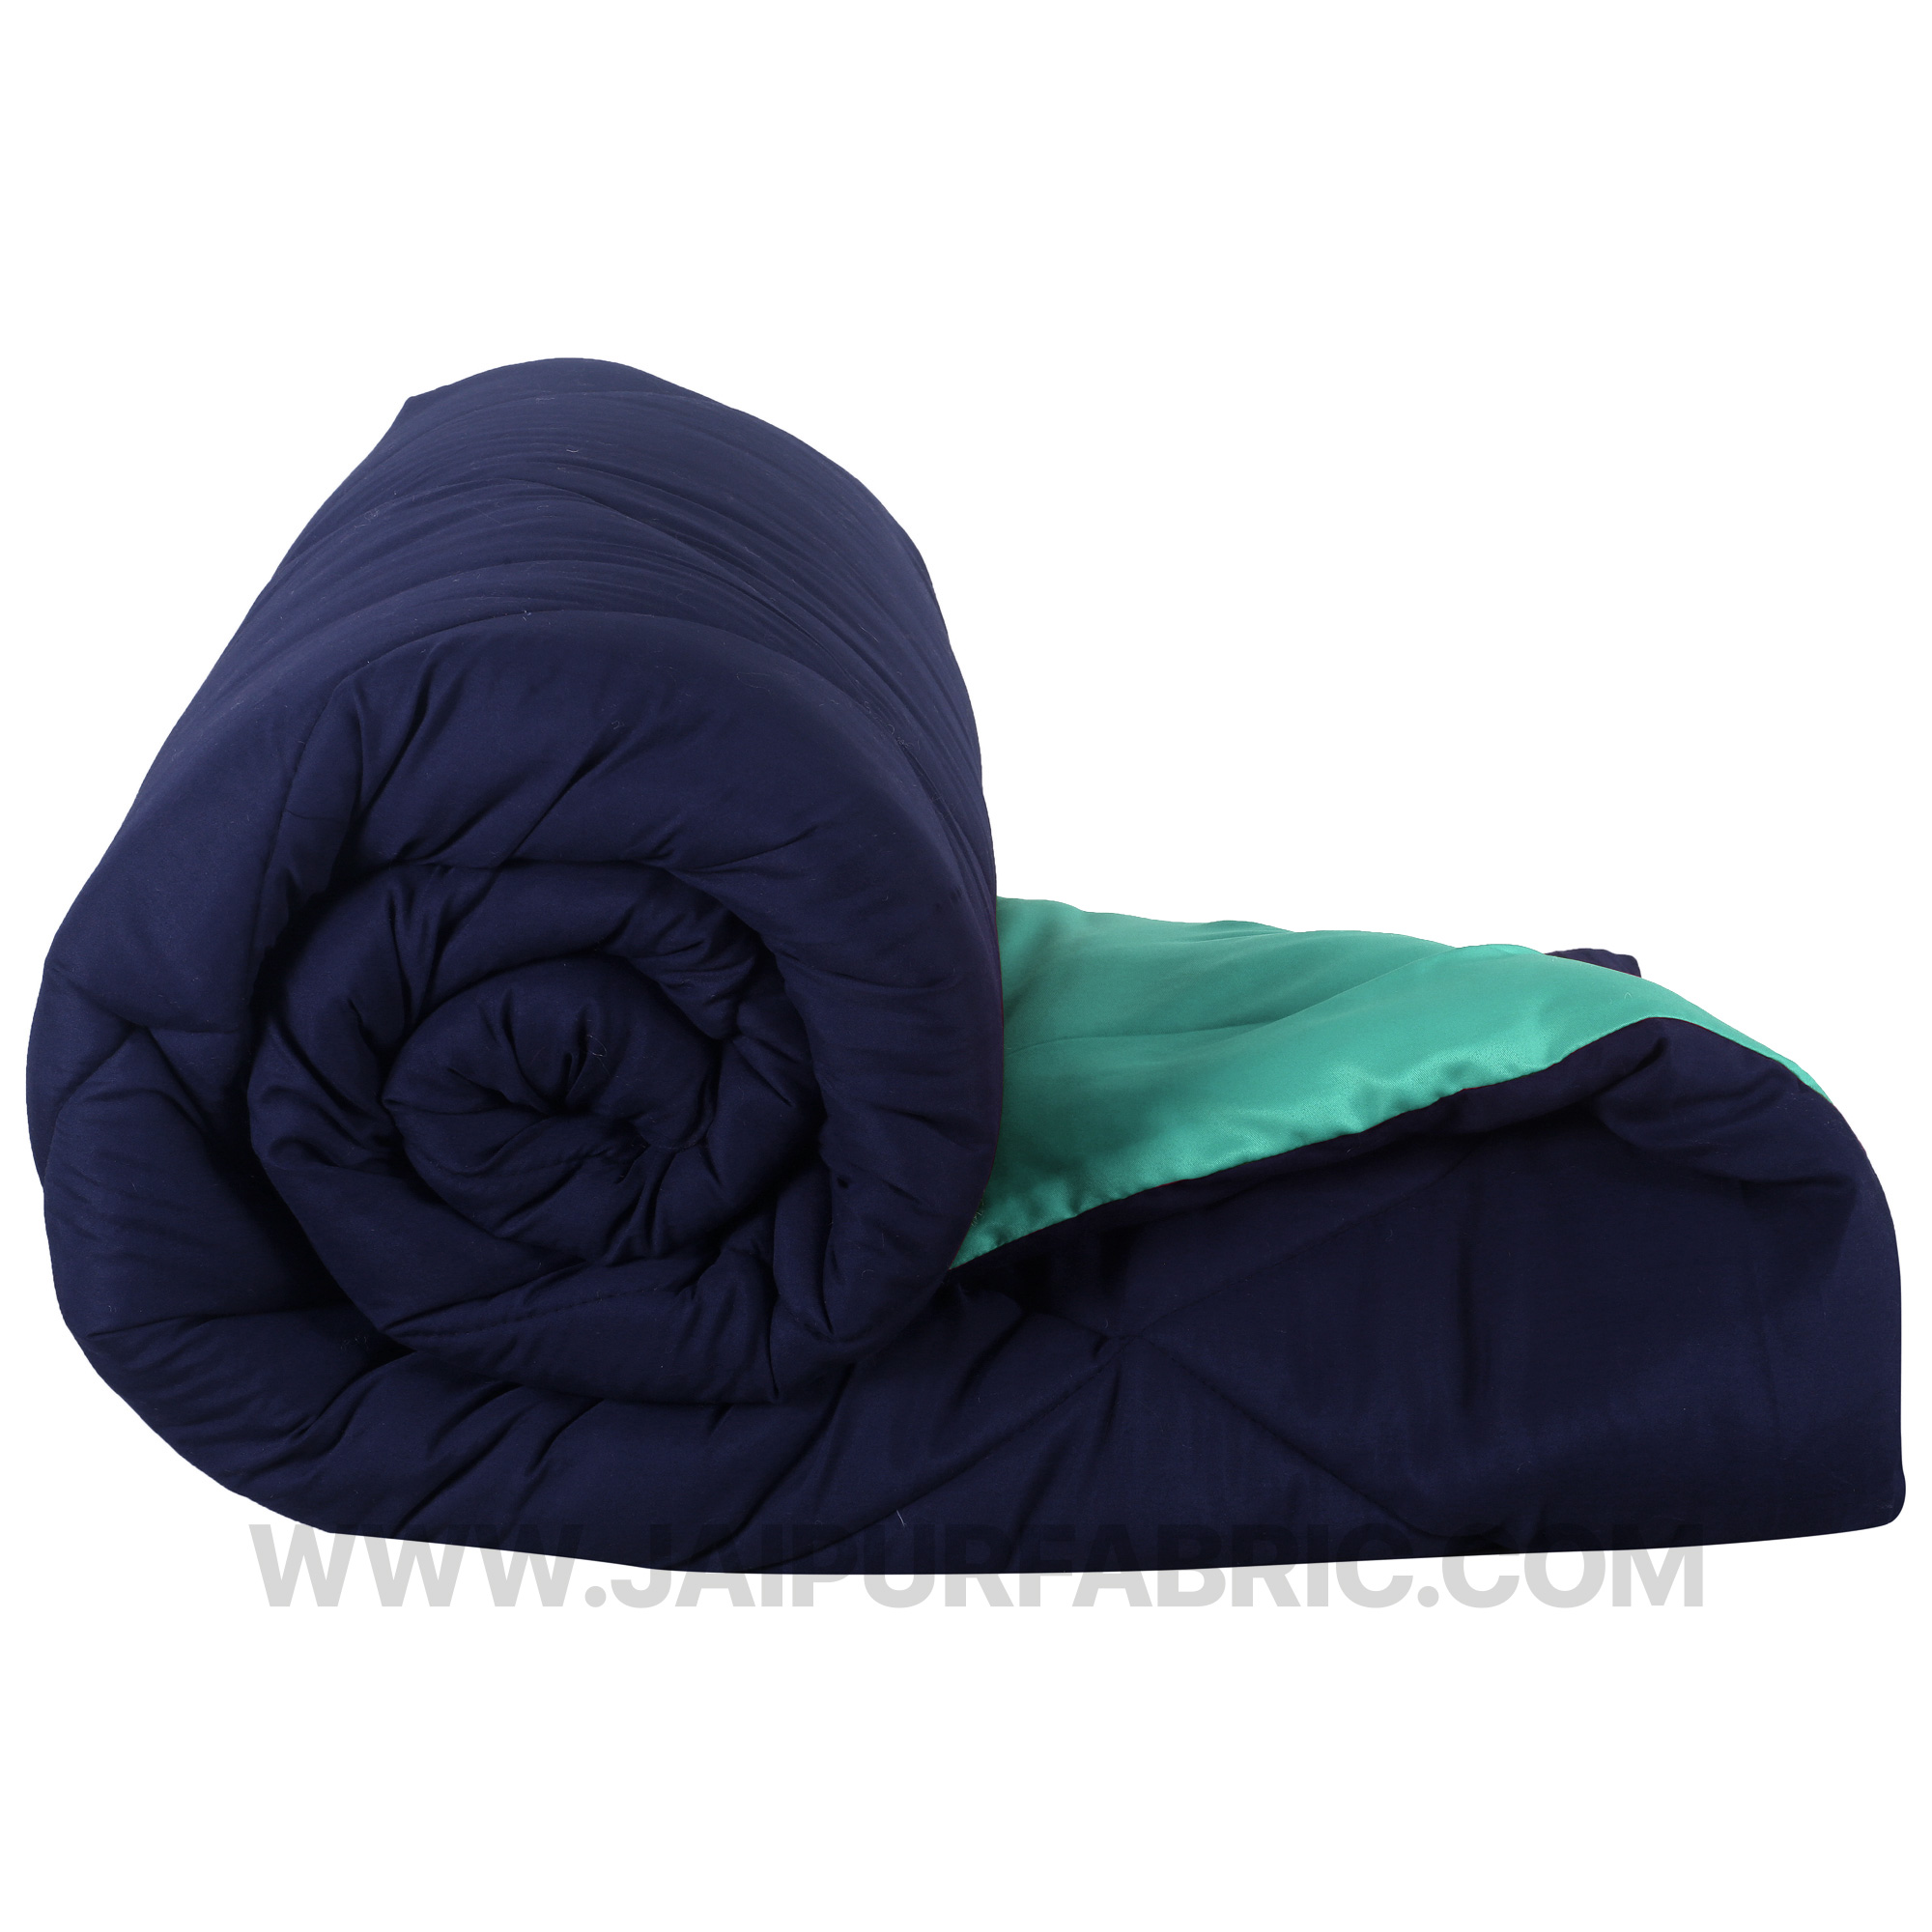 Navy Blue- Aqua Green Single Bed Comforter